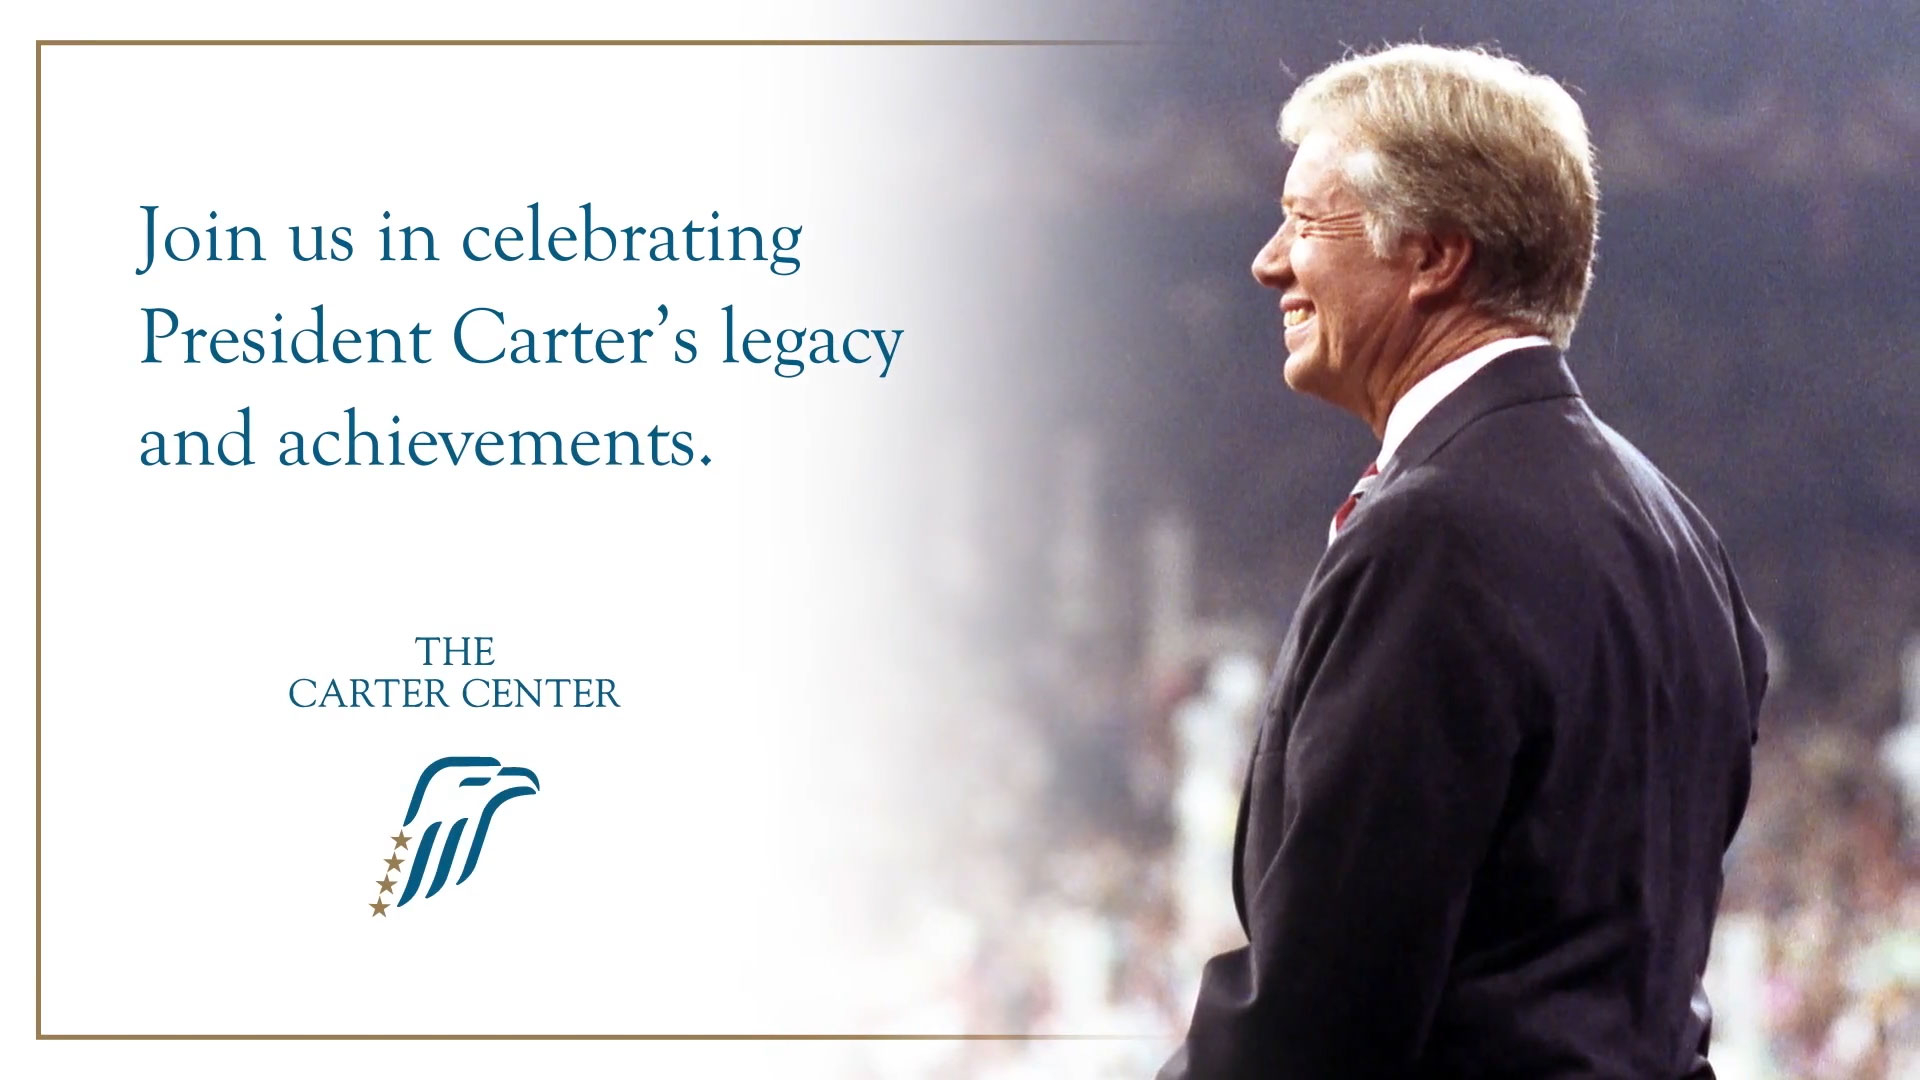 The Carter Center 99th Celebration Video